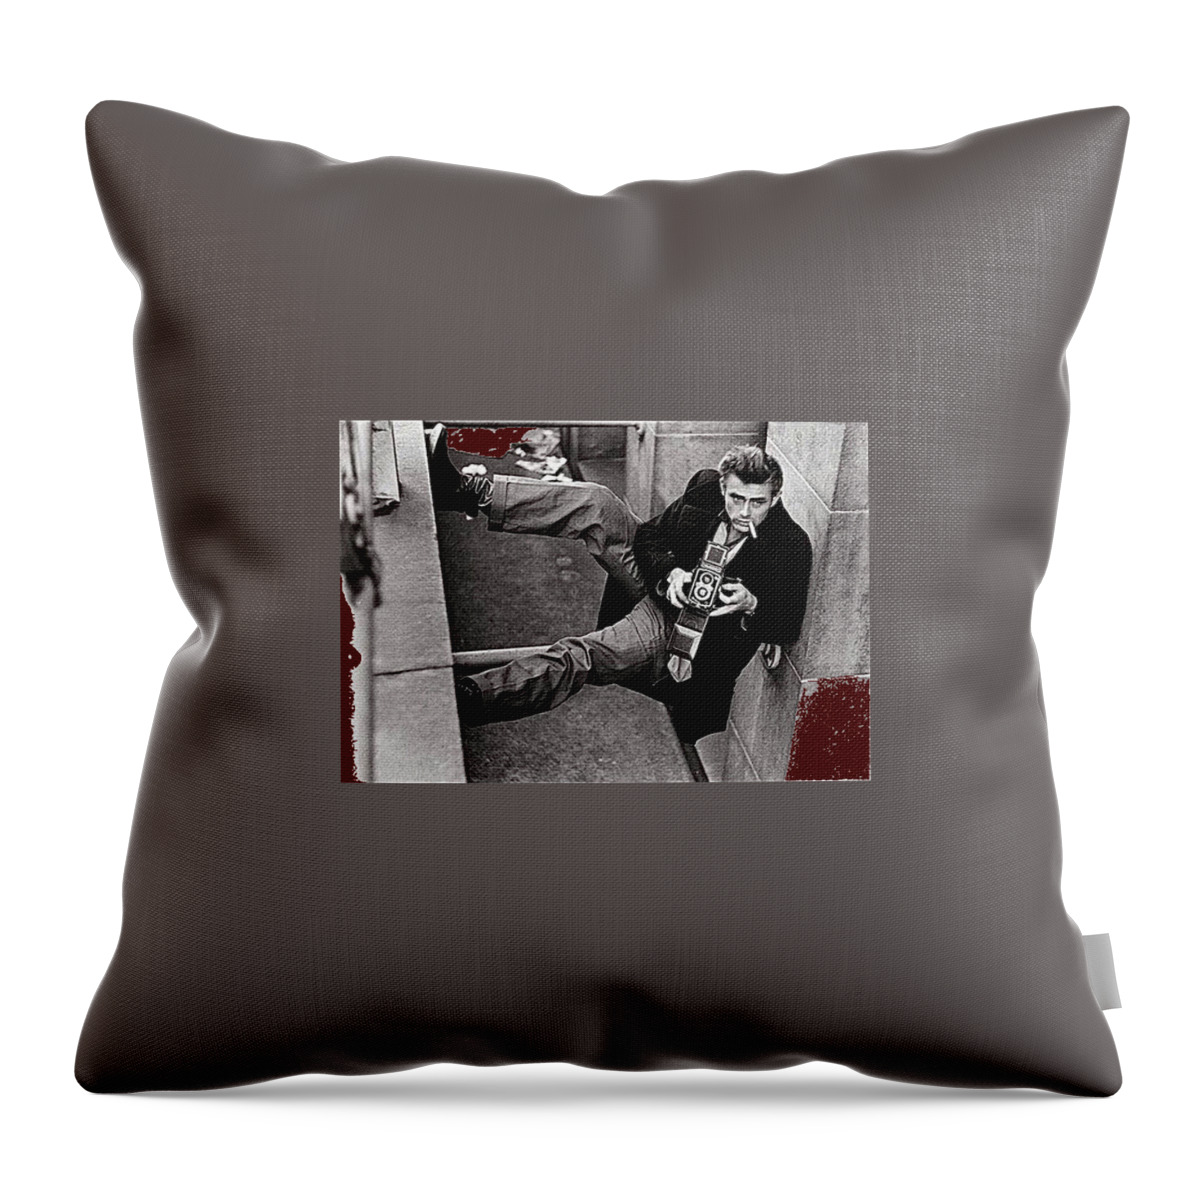 James Dean Rolleiflex New York City 1954-2014 Throw Pillow featuring the photograph James Dean Rolleiflex New York City 1954-2014 by David Lee Guss